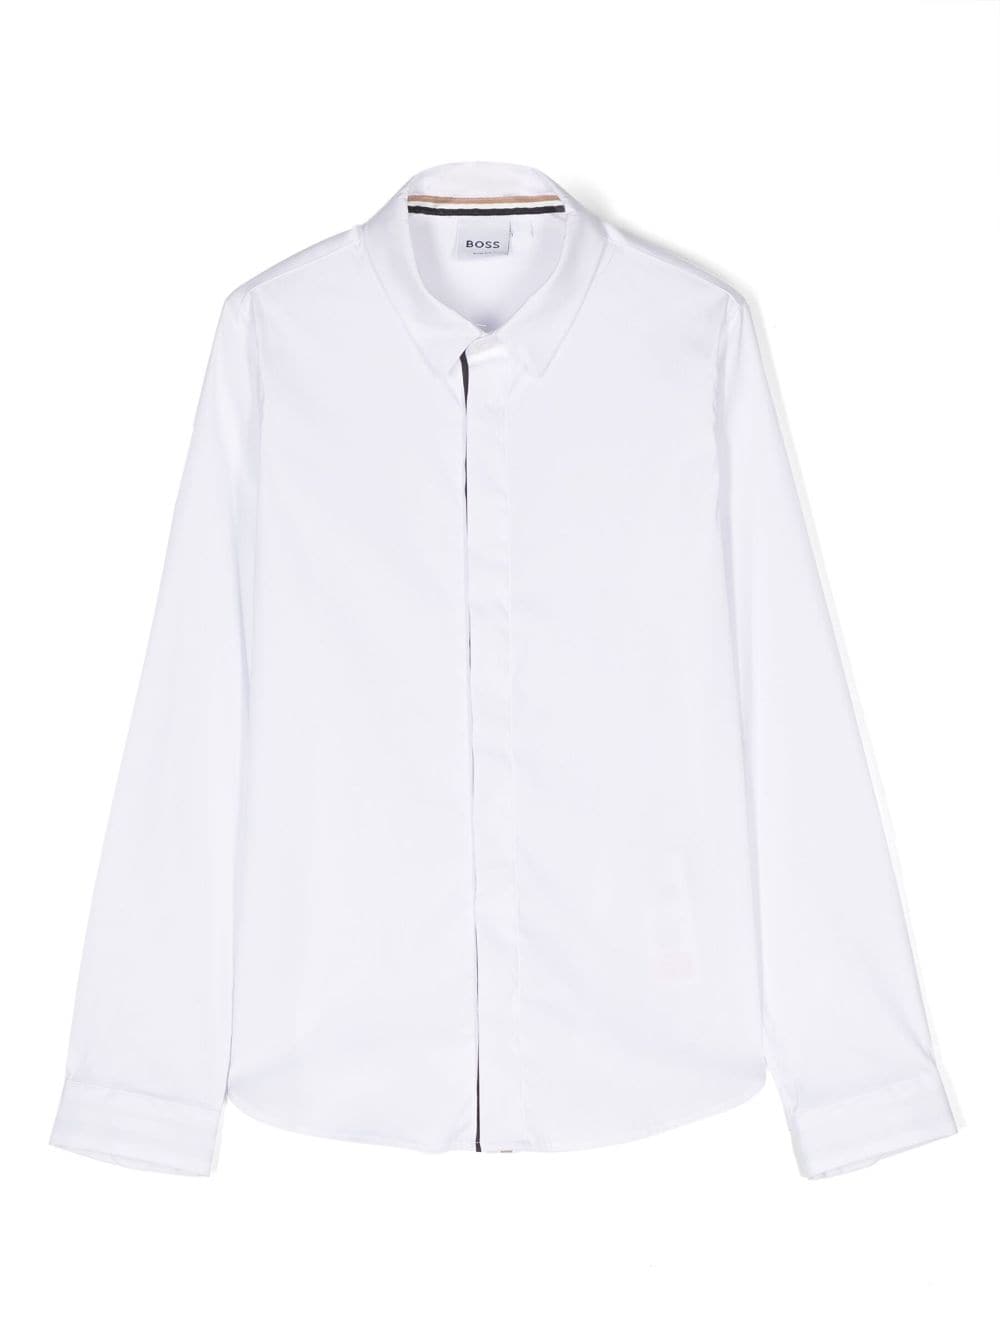 White cotton blend boy HUGO BOSS shirt